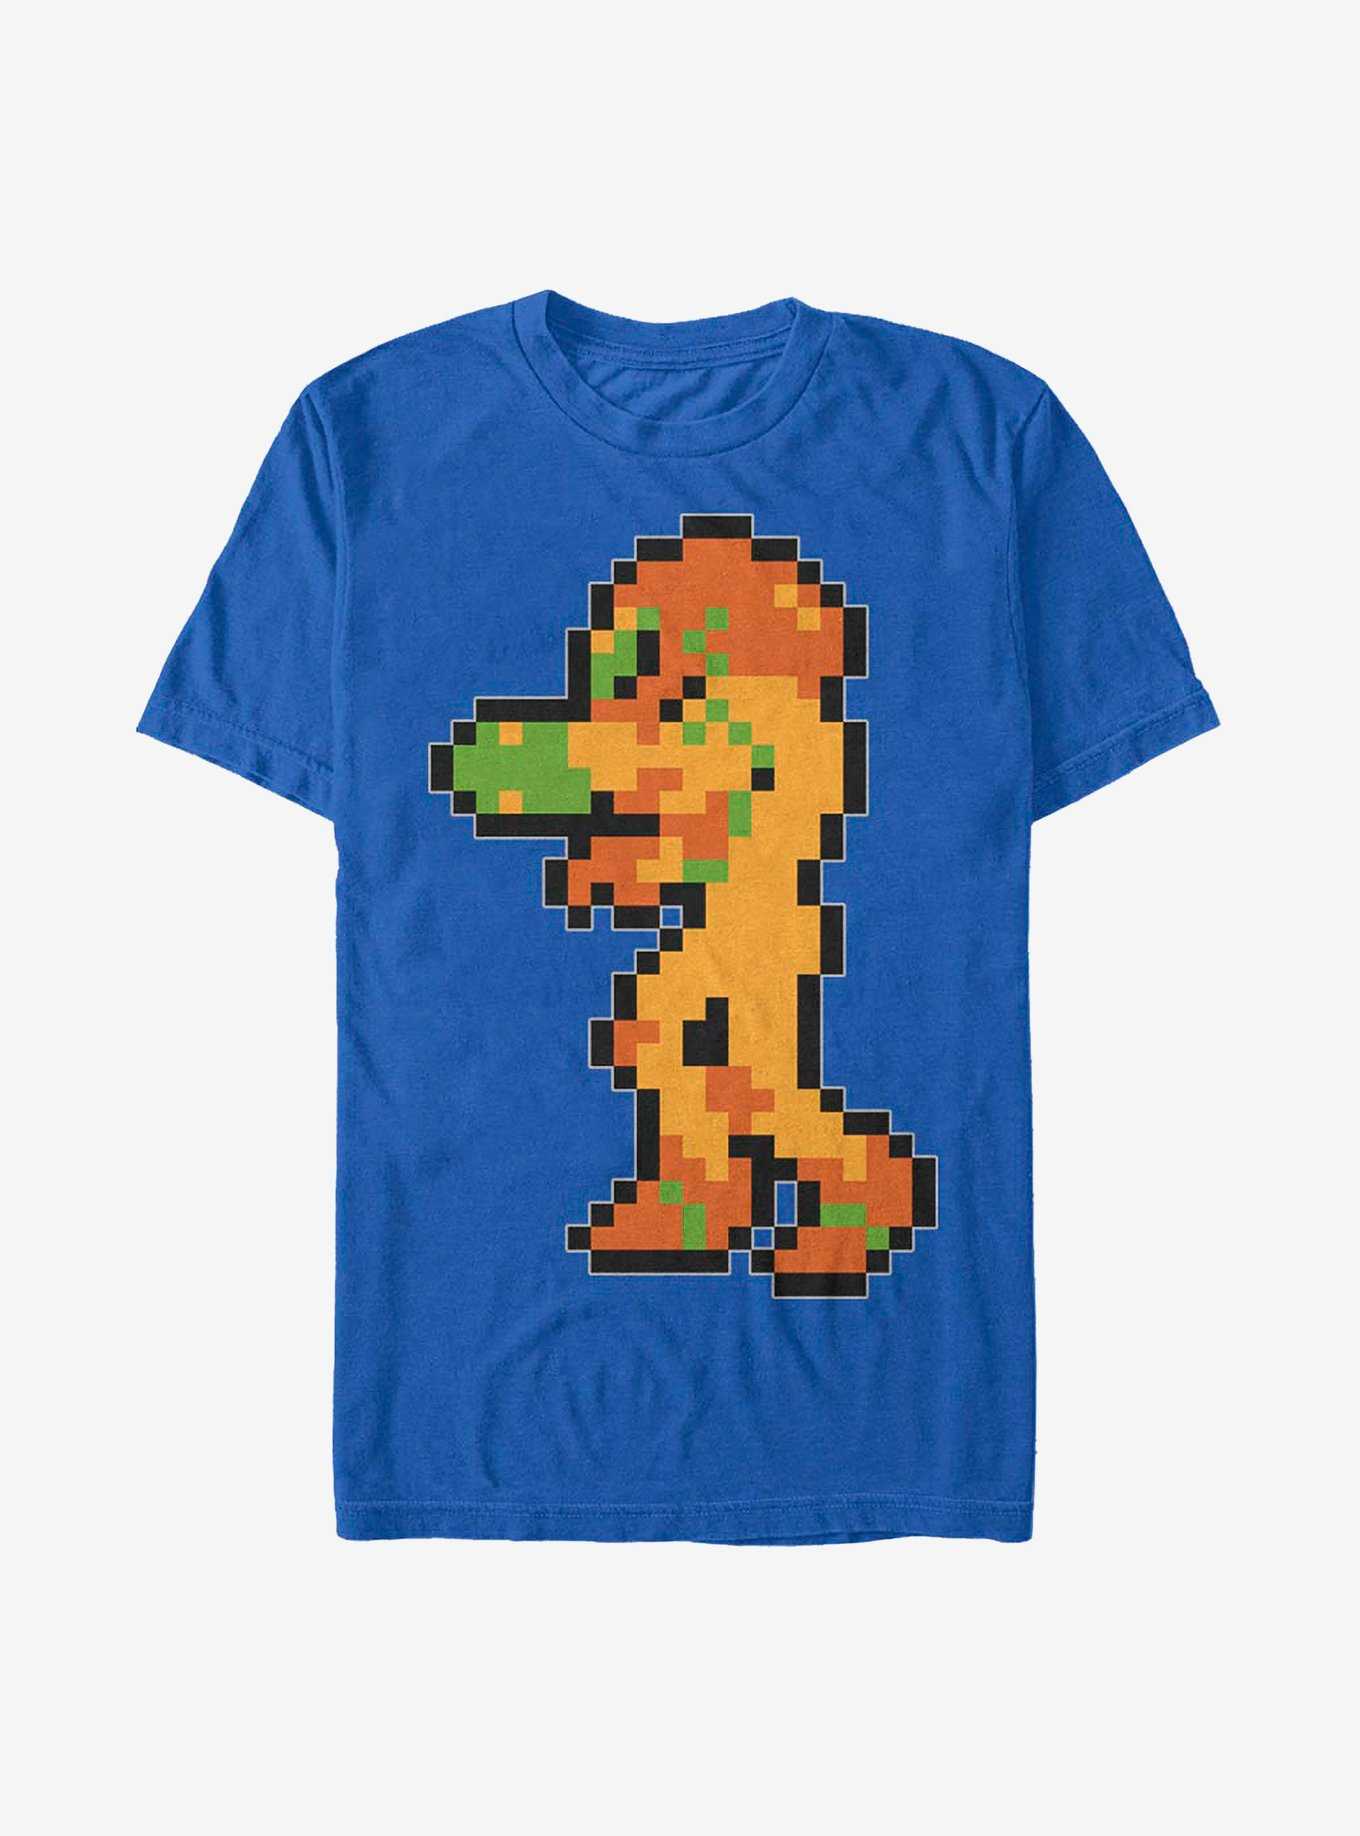 Nintendo Metroid Samus Pixels T-Shirt, , hi-res